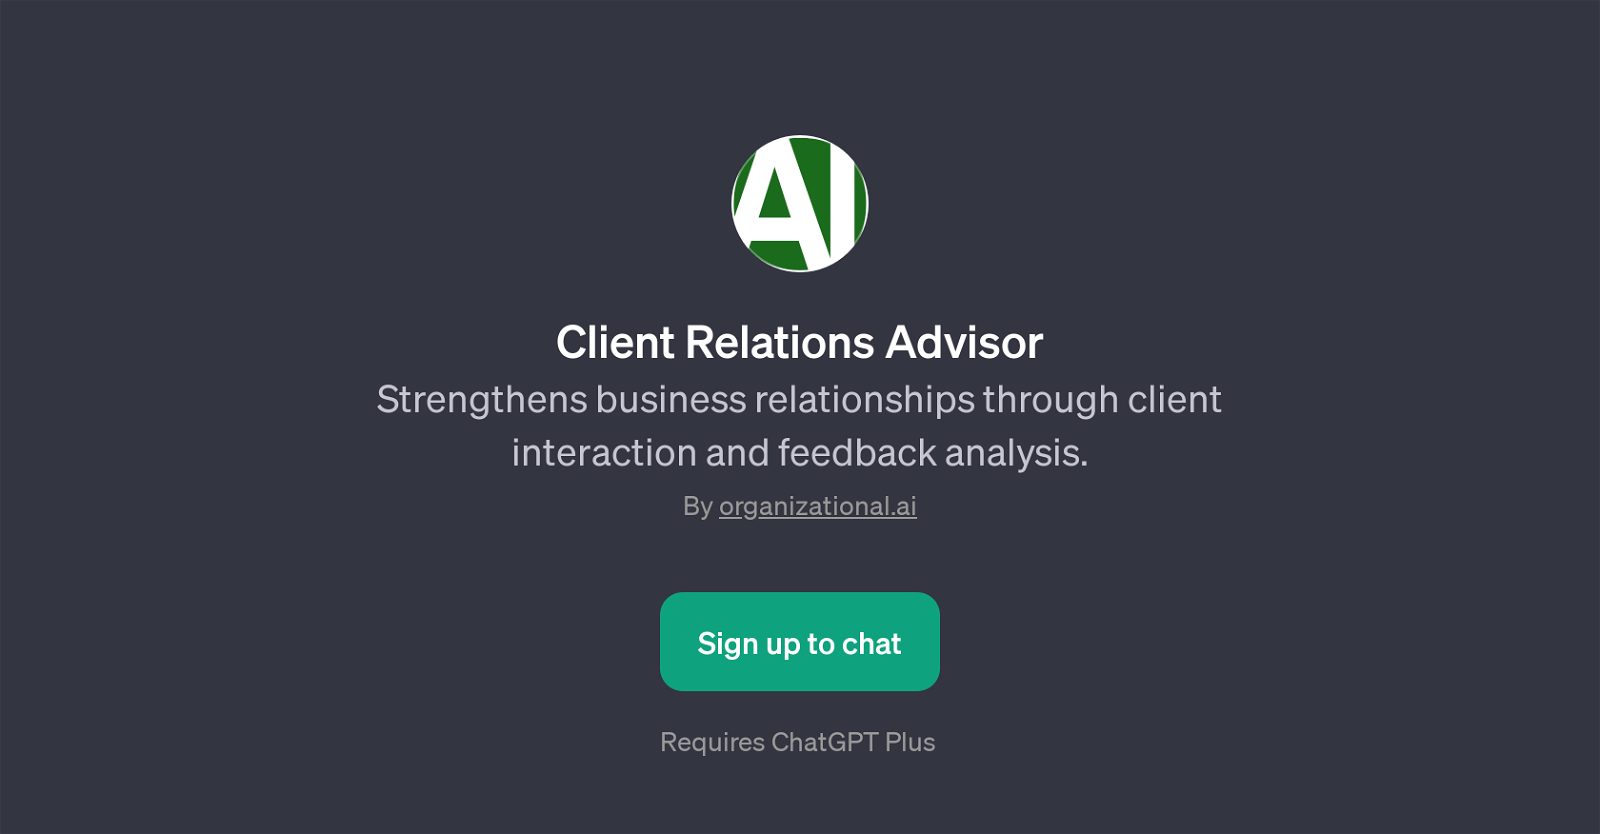 Client Relations Advisor website